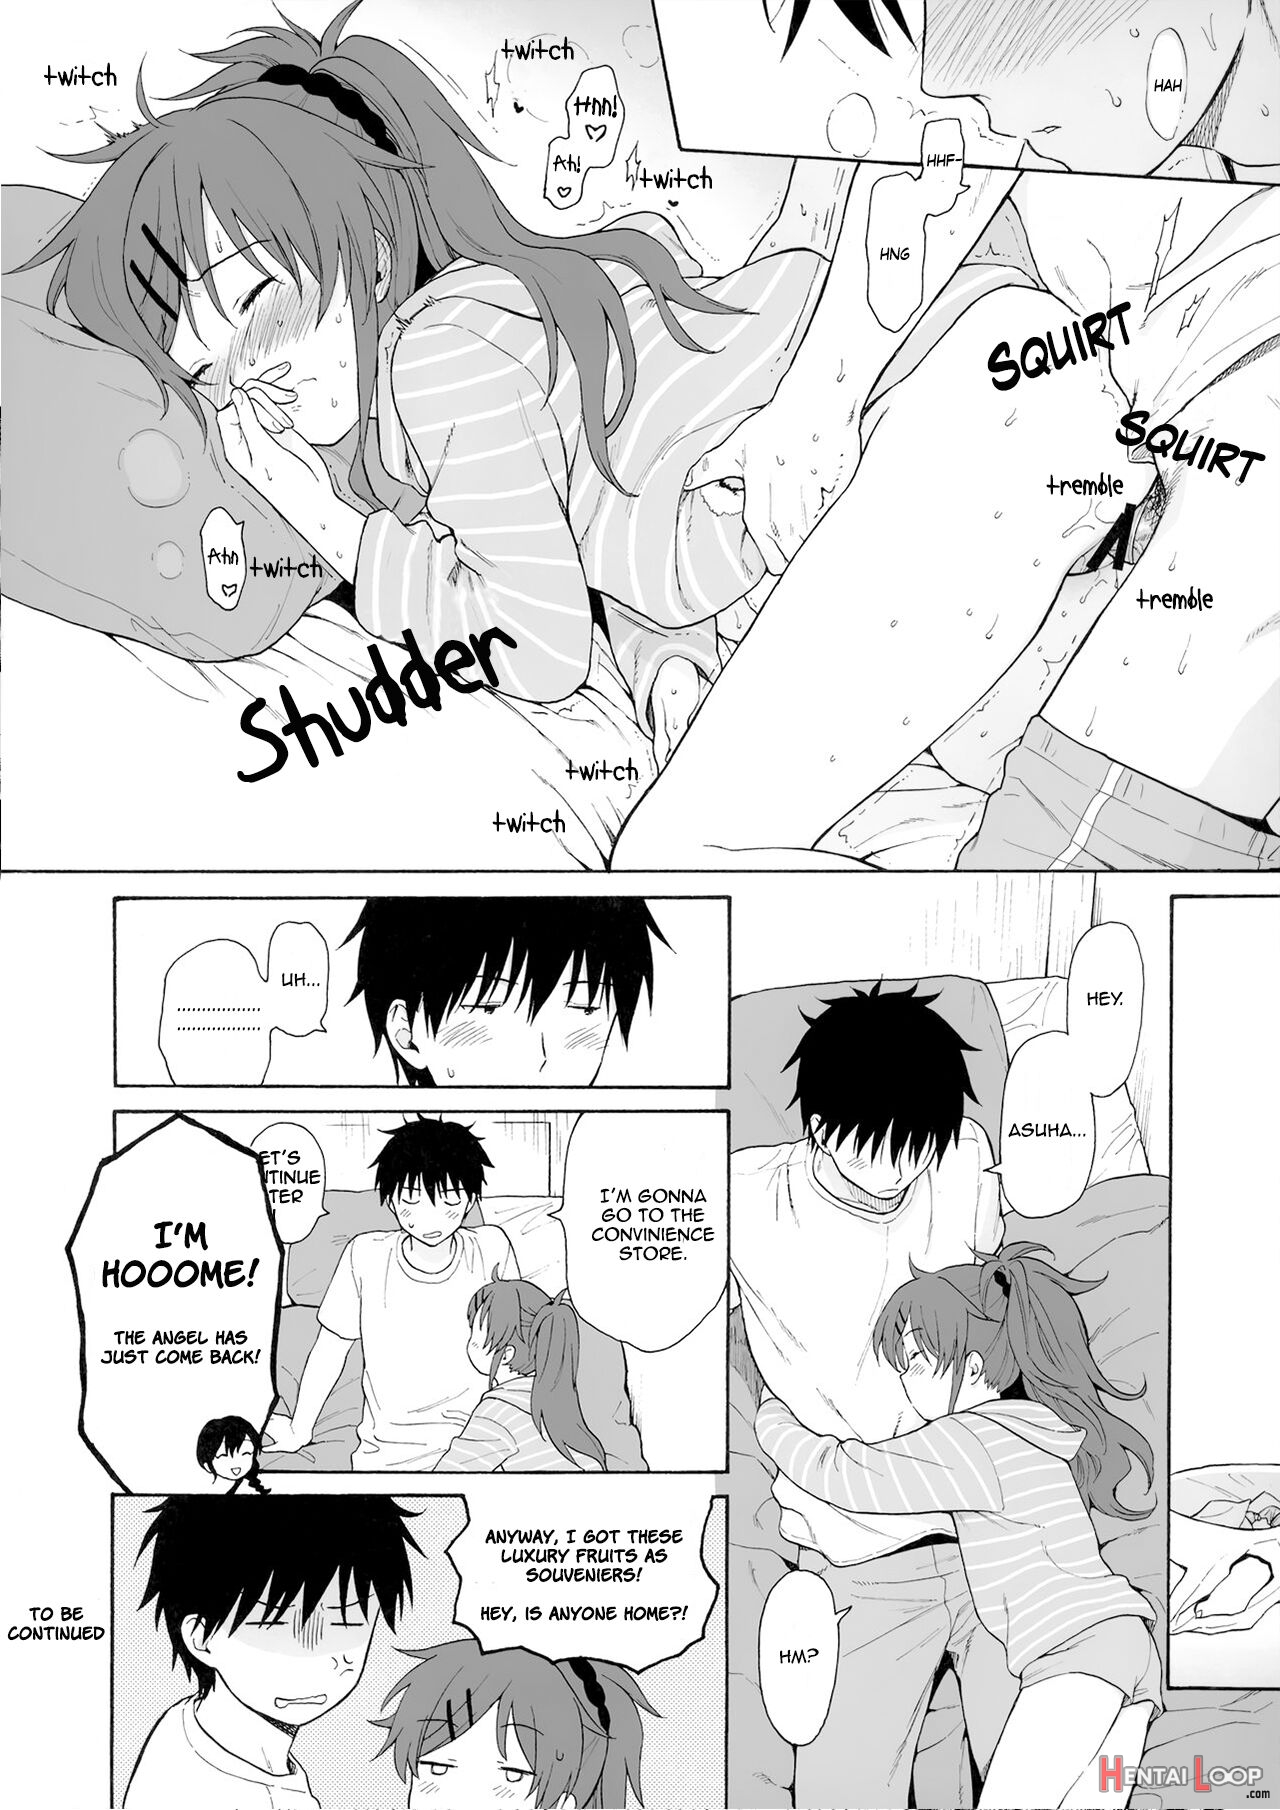 Clever Ed Manga page 4